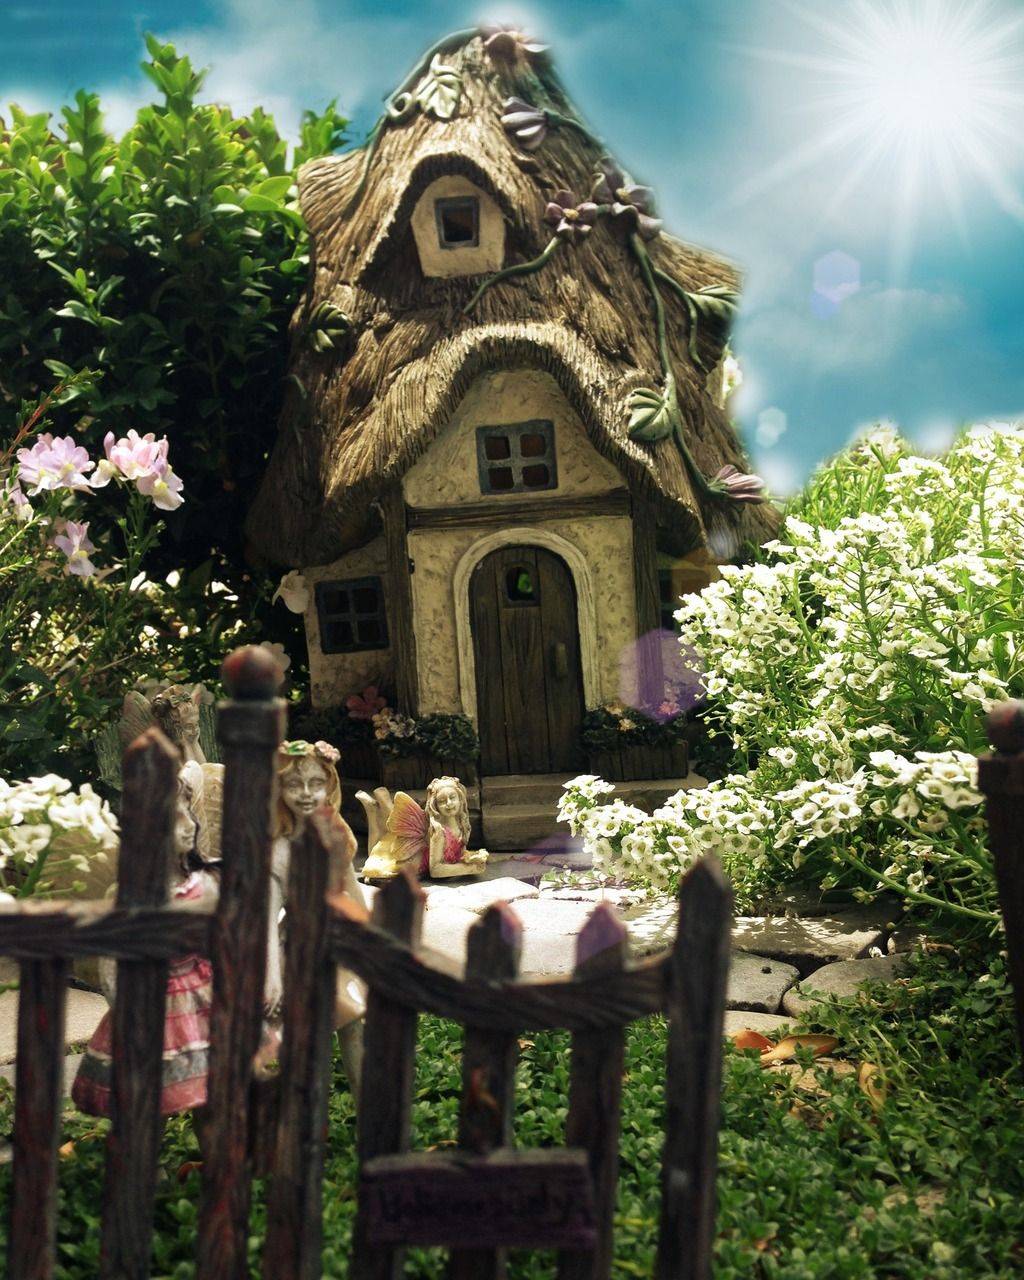 Miniature Fairy Garden Solar Pixie House Green Plowhearth